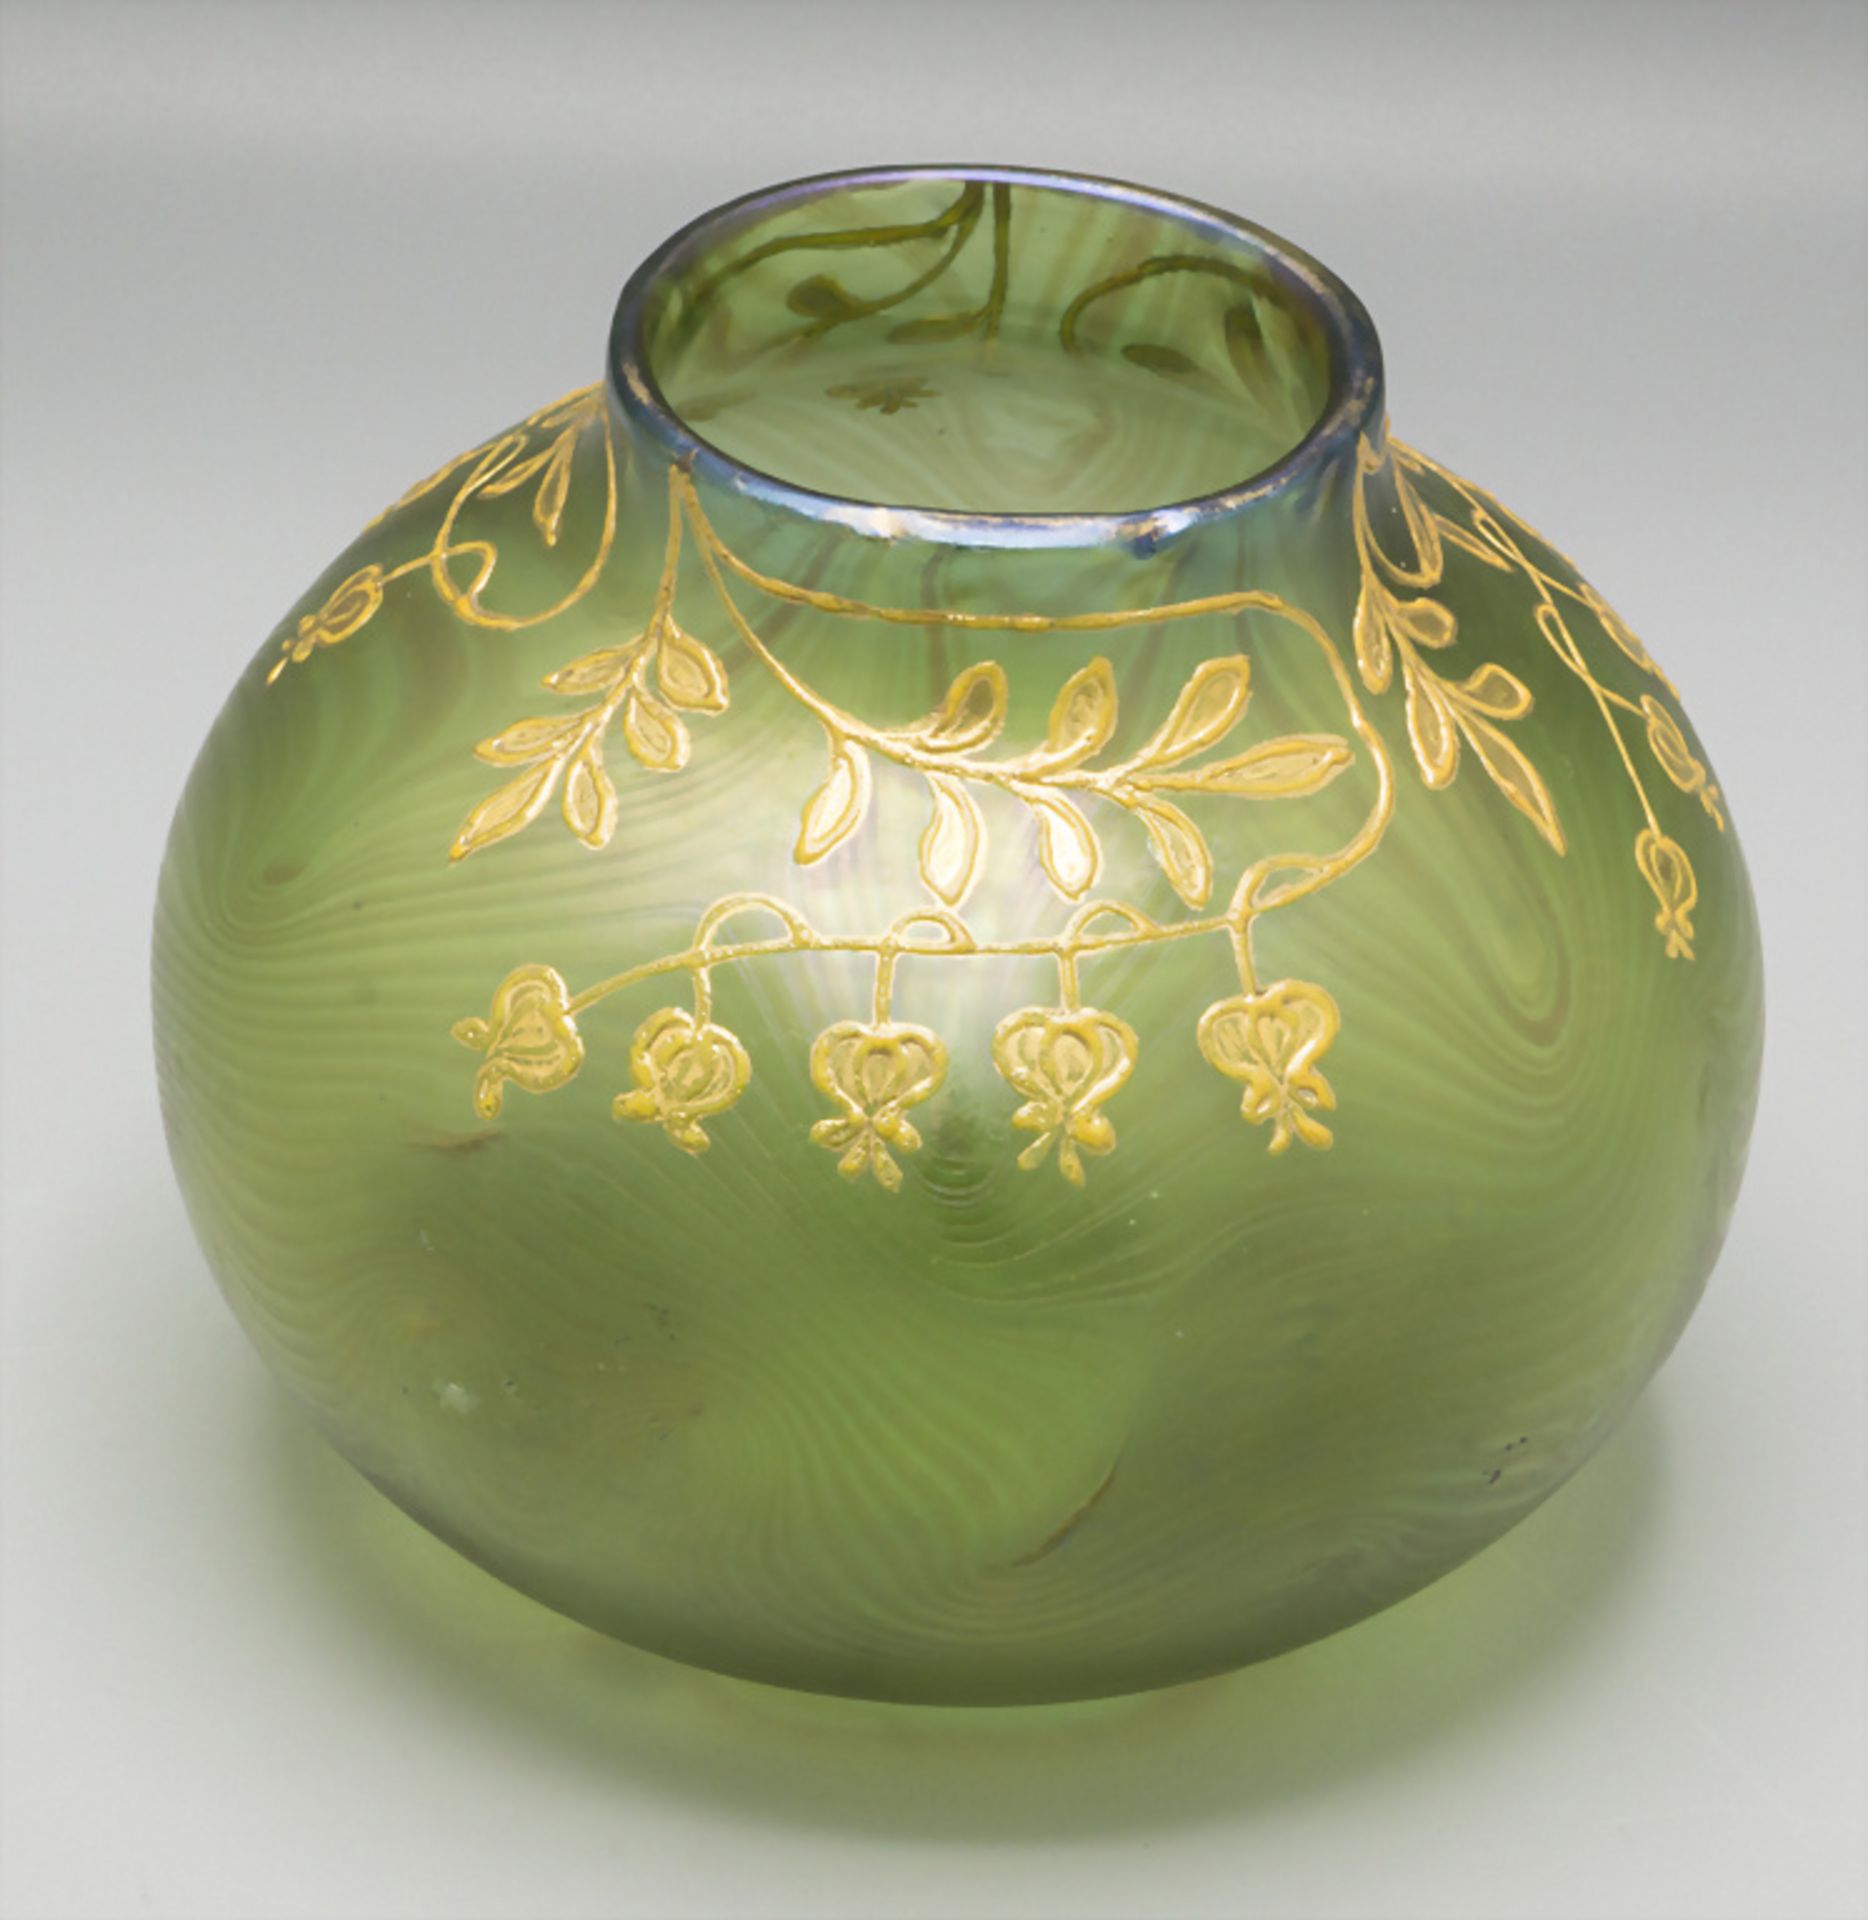 Jugendstil Glasziervase / An Art Nouveau glass vase, Johann Loetz Wwe, Klostermühle, um 1905